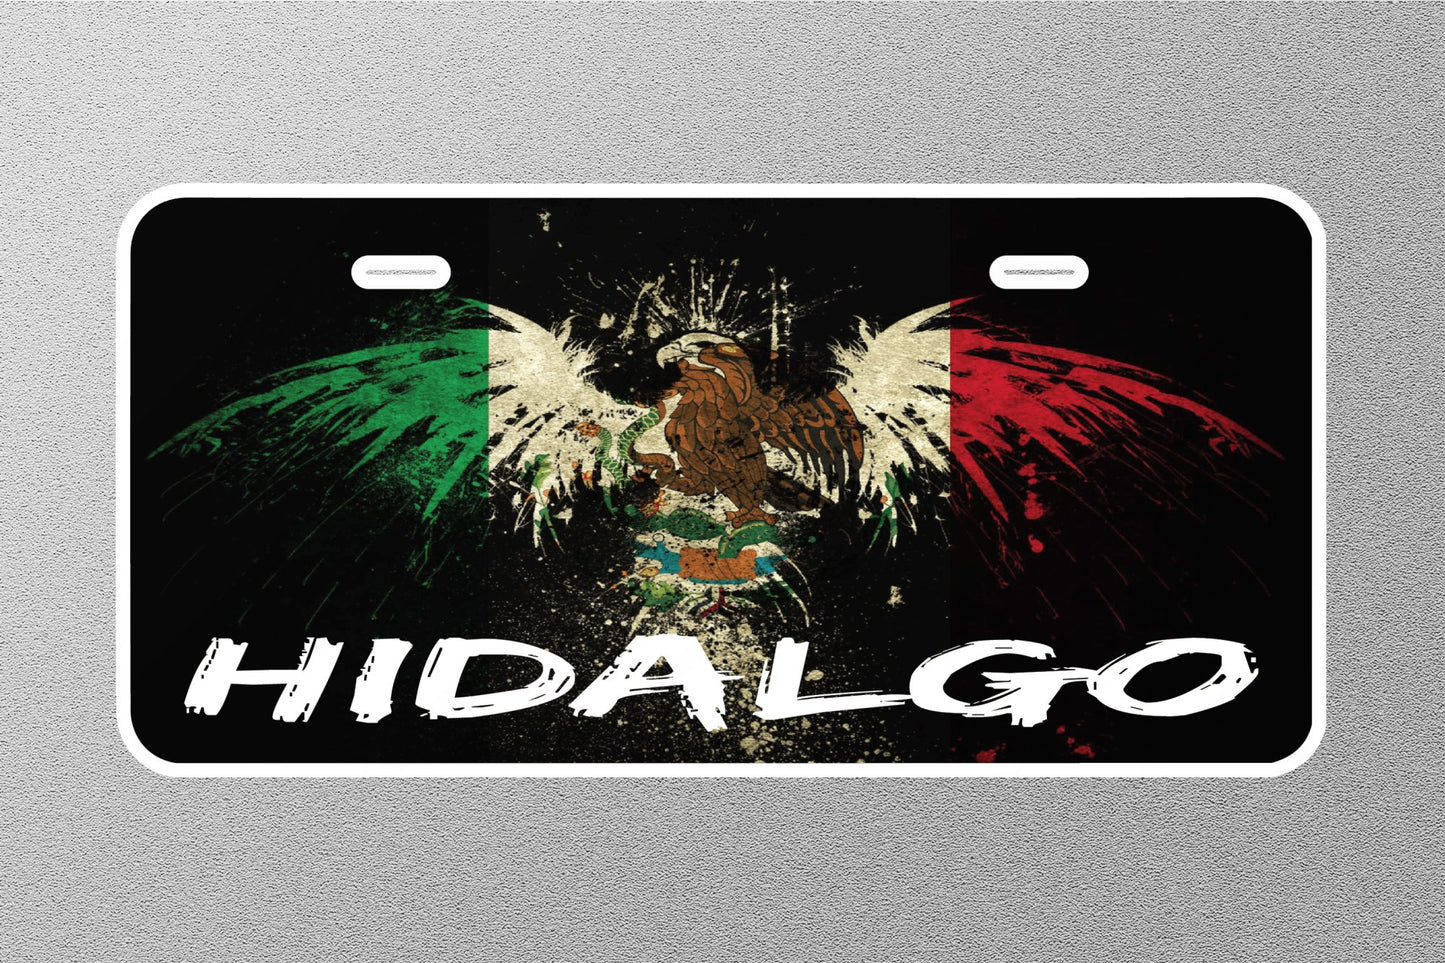 HIDALGO Mexico Licence Plate Sticker